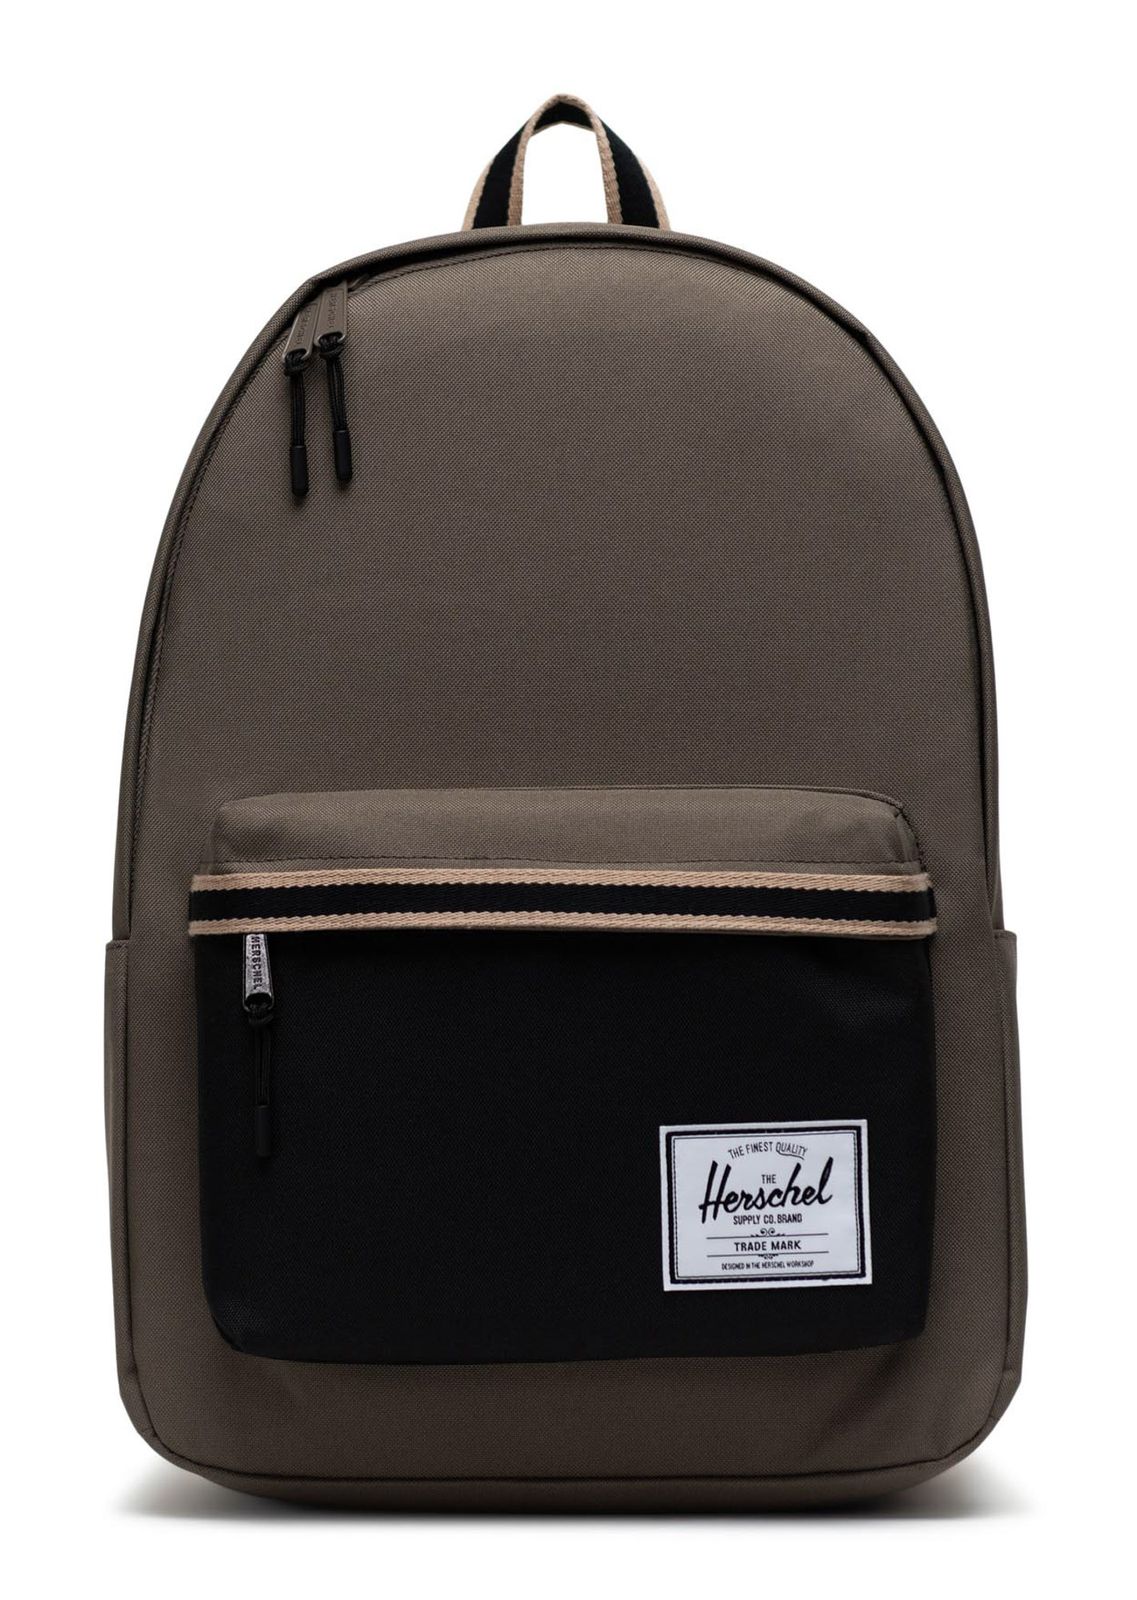 Herschel X-Large Backpack | Buy bags, purses & accessories online ...